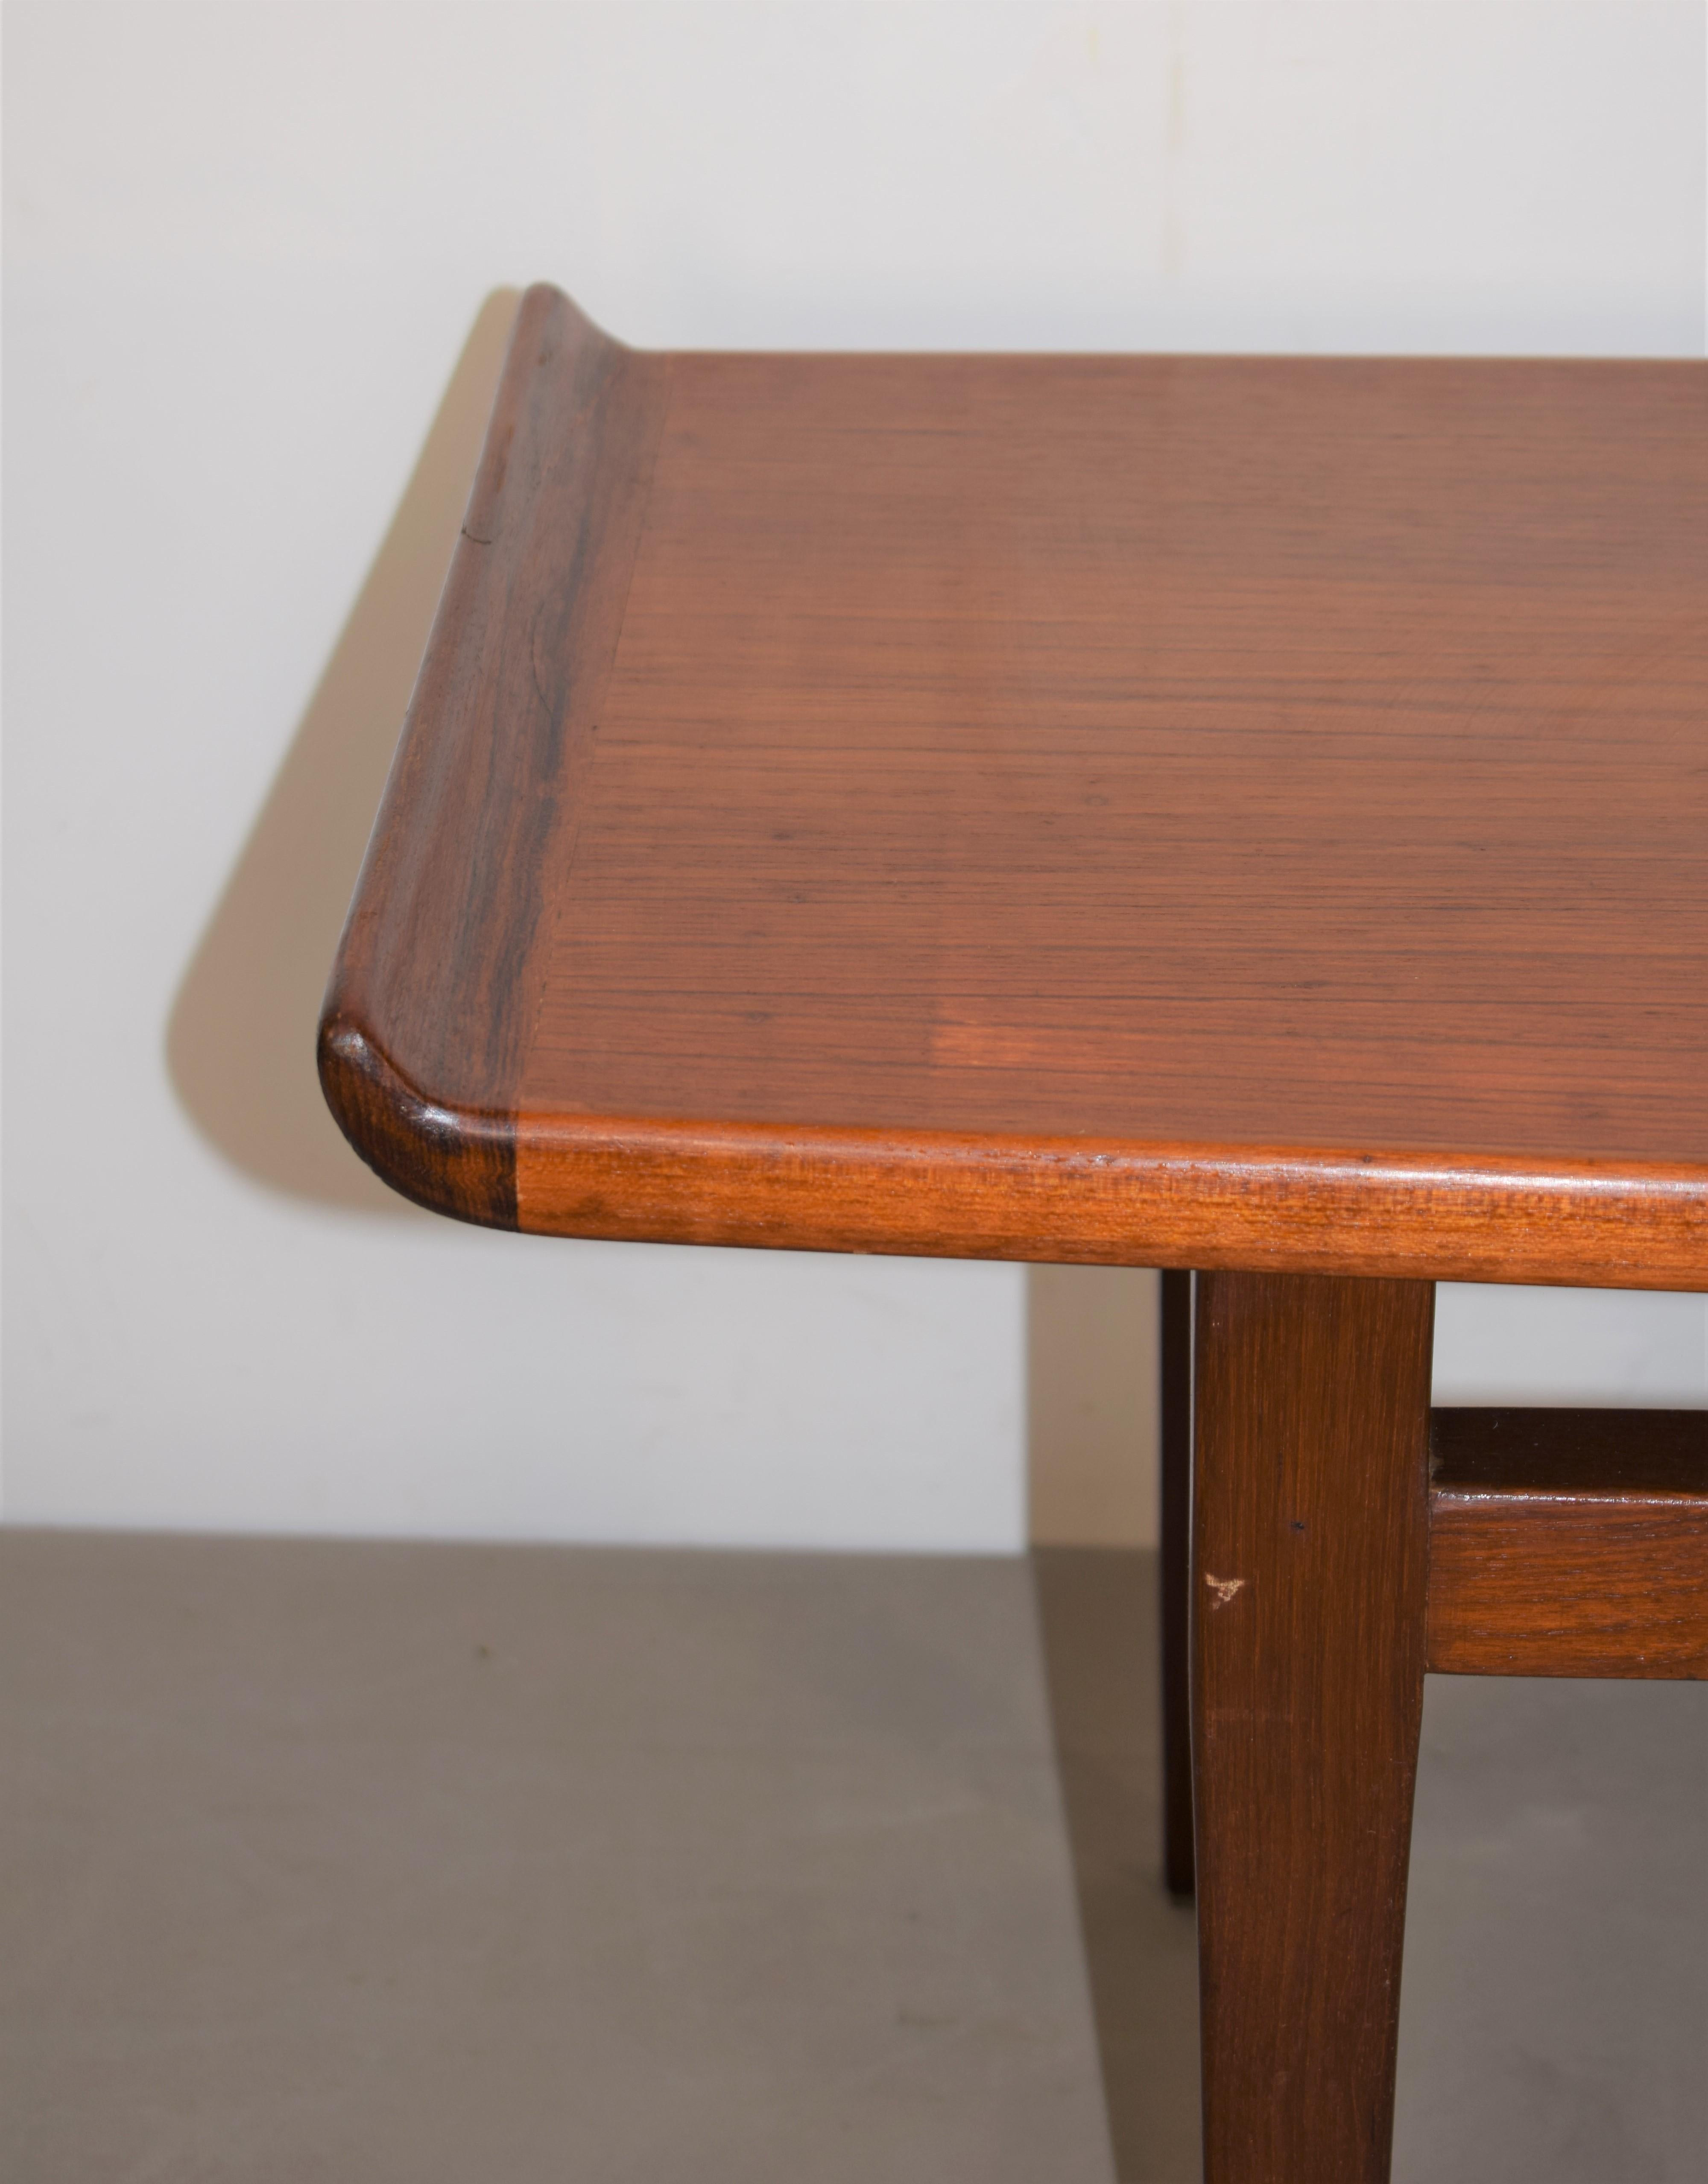 Mid-Century Modern Italian bench, teak, 1970s.
Dimensions: H=43 cm; W=133 cm; D=45 cm.